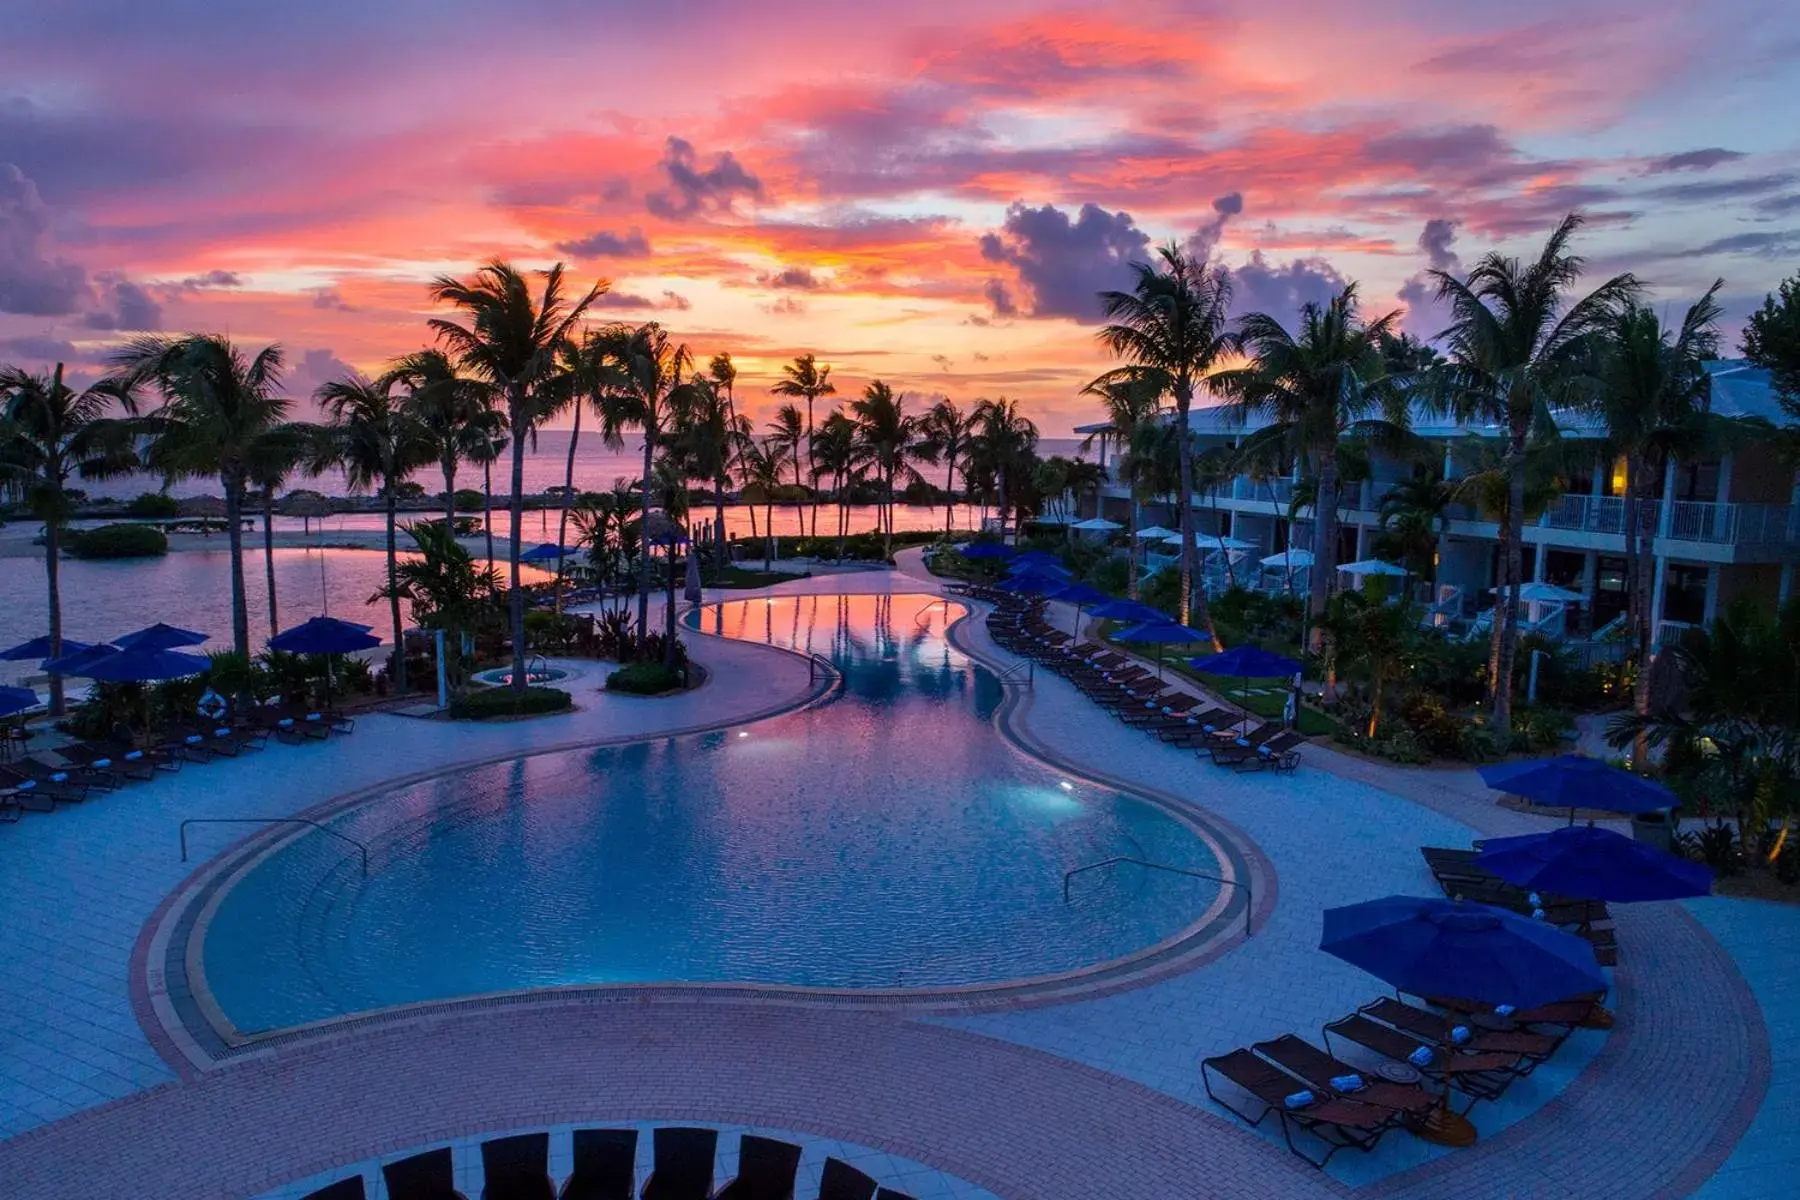 Bird's eye view, Sunrise/Sunset in Hawks Cay Resort